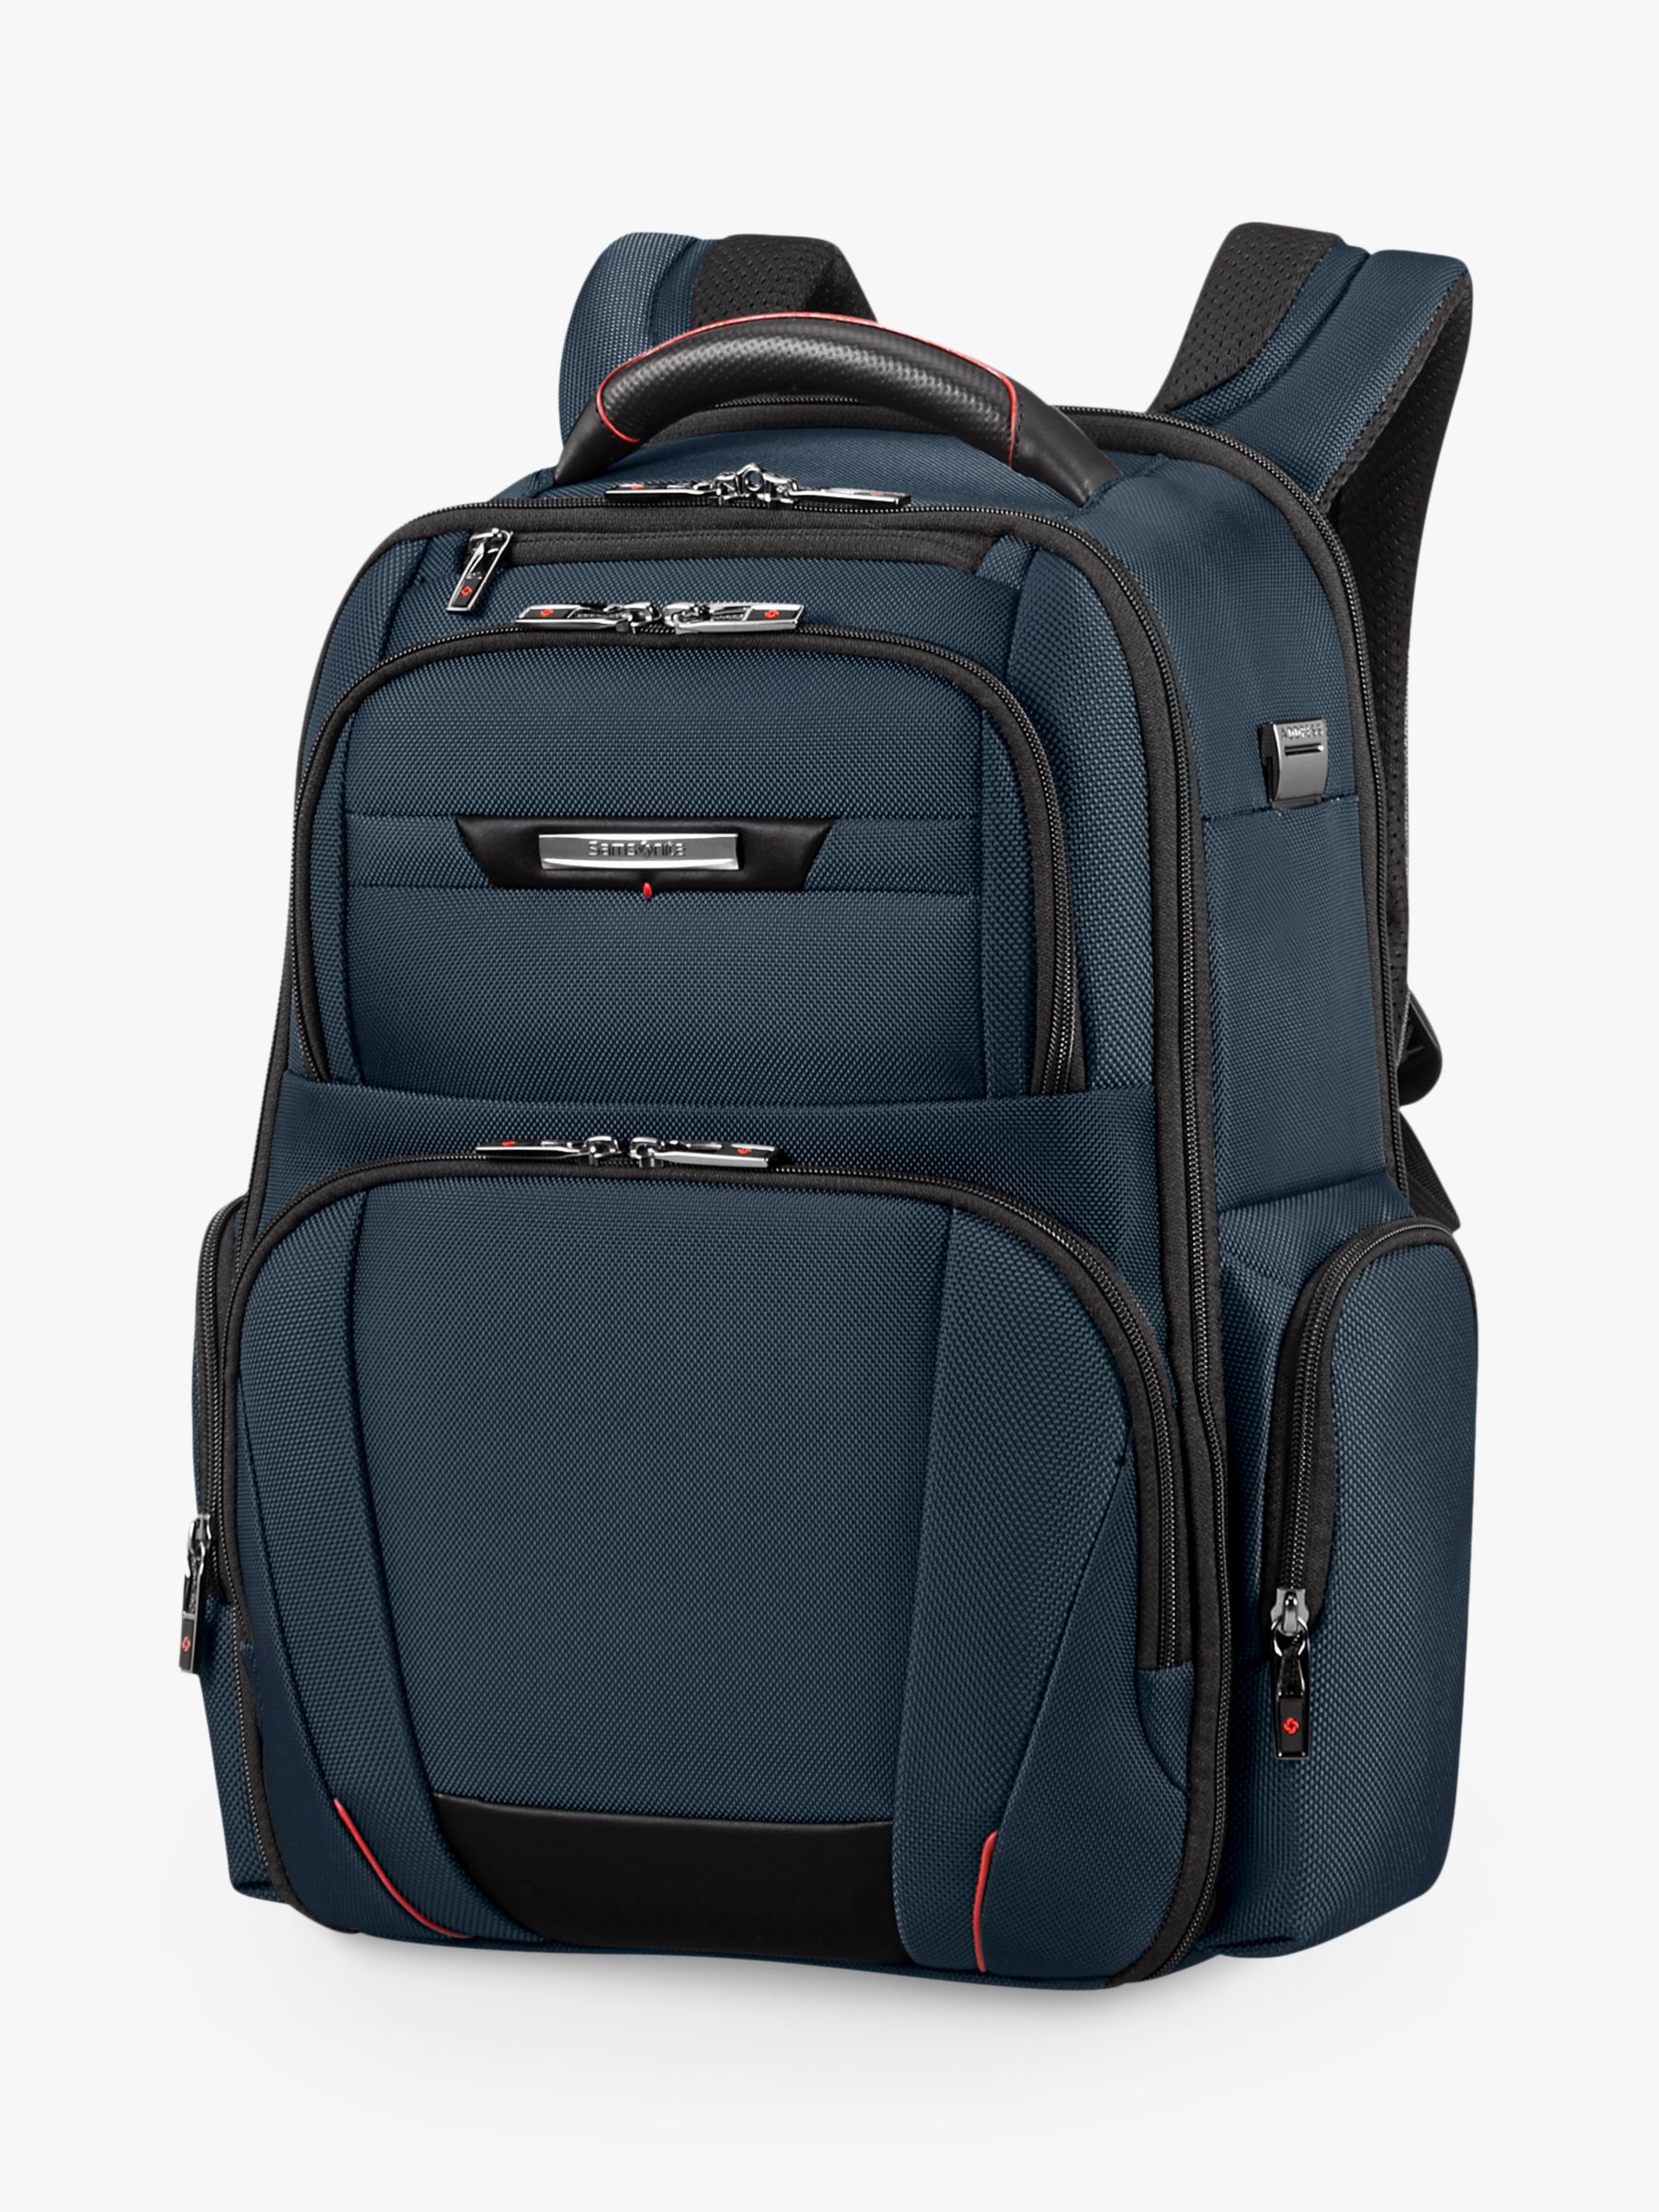  Samsonite  Pro Dlx 5 15 Laptop Backpack  Oxford Blue  at 